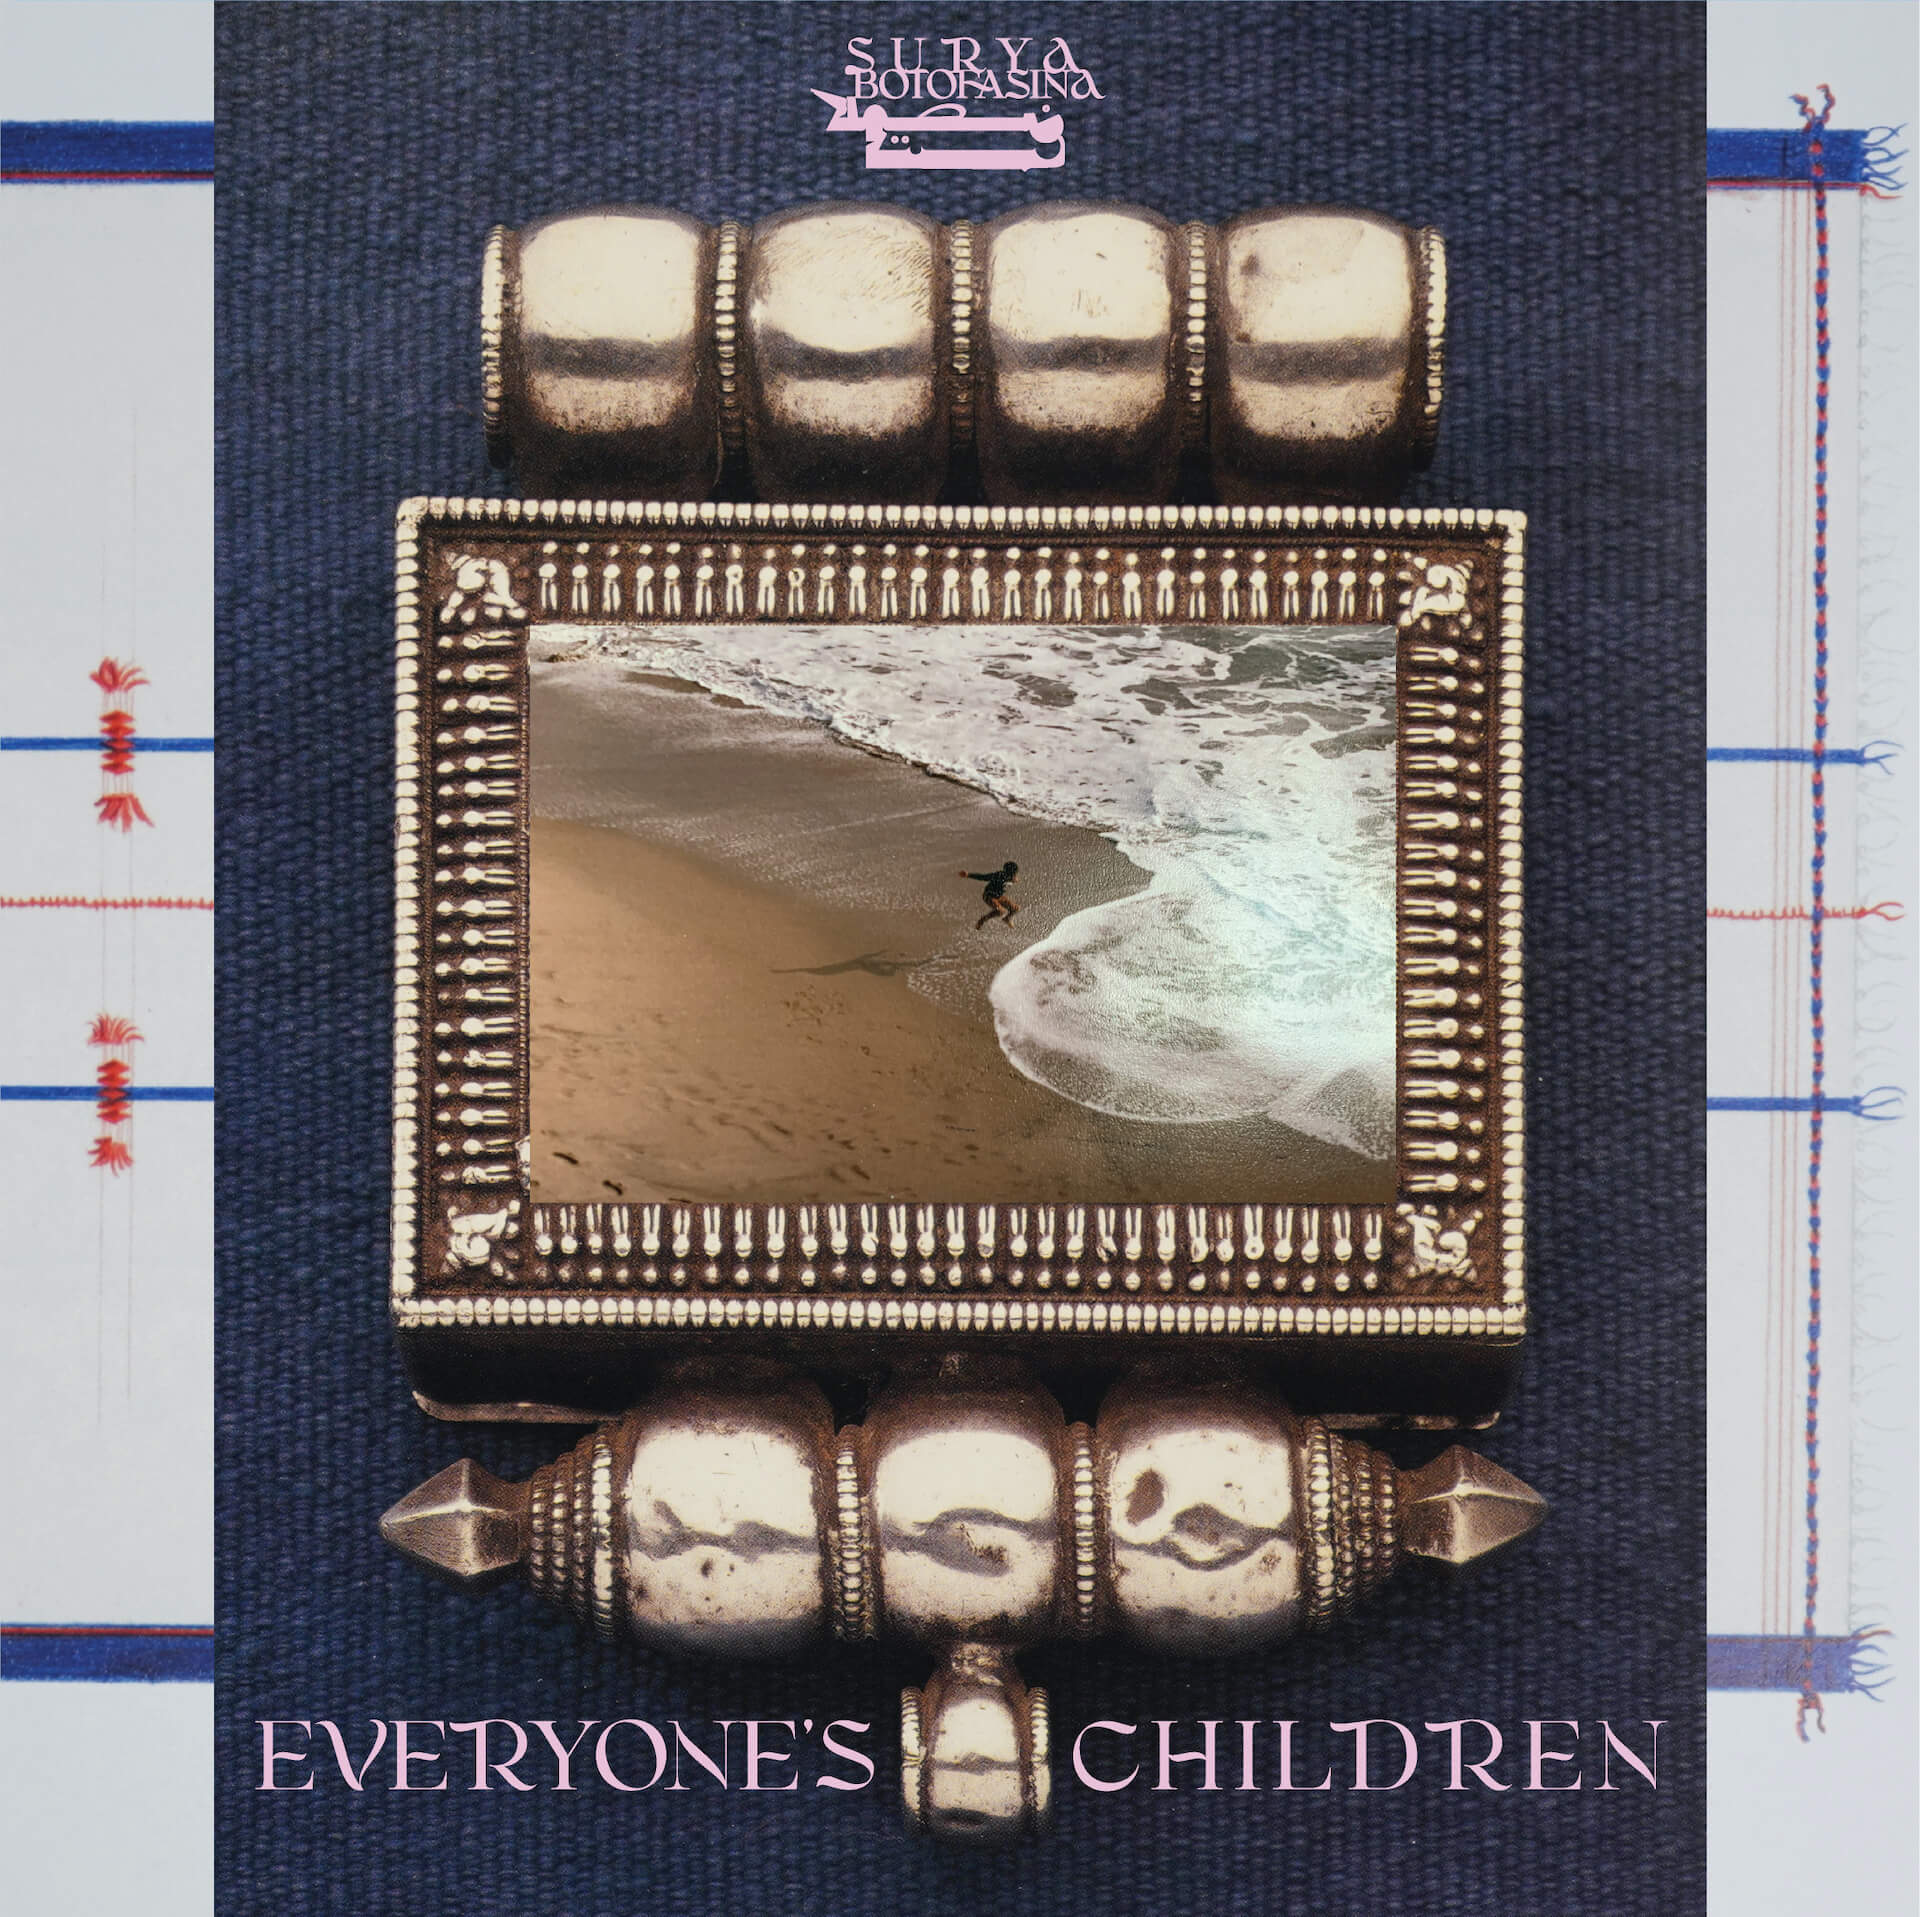 Surya Botofasina、Carlos Niñoプロデュースのデビューアルバム『Everyone's Children』をリリース｜Alice Coltraneの愛弟子による傑作スピリチュアル・ジャズ music221104-surya-botofasina2